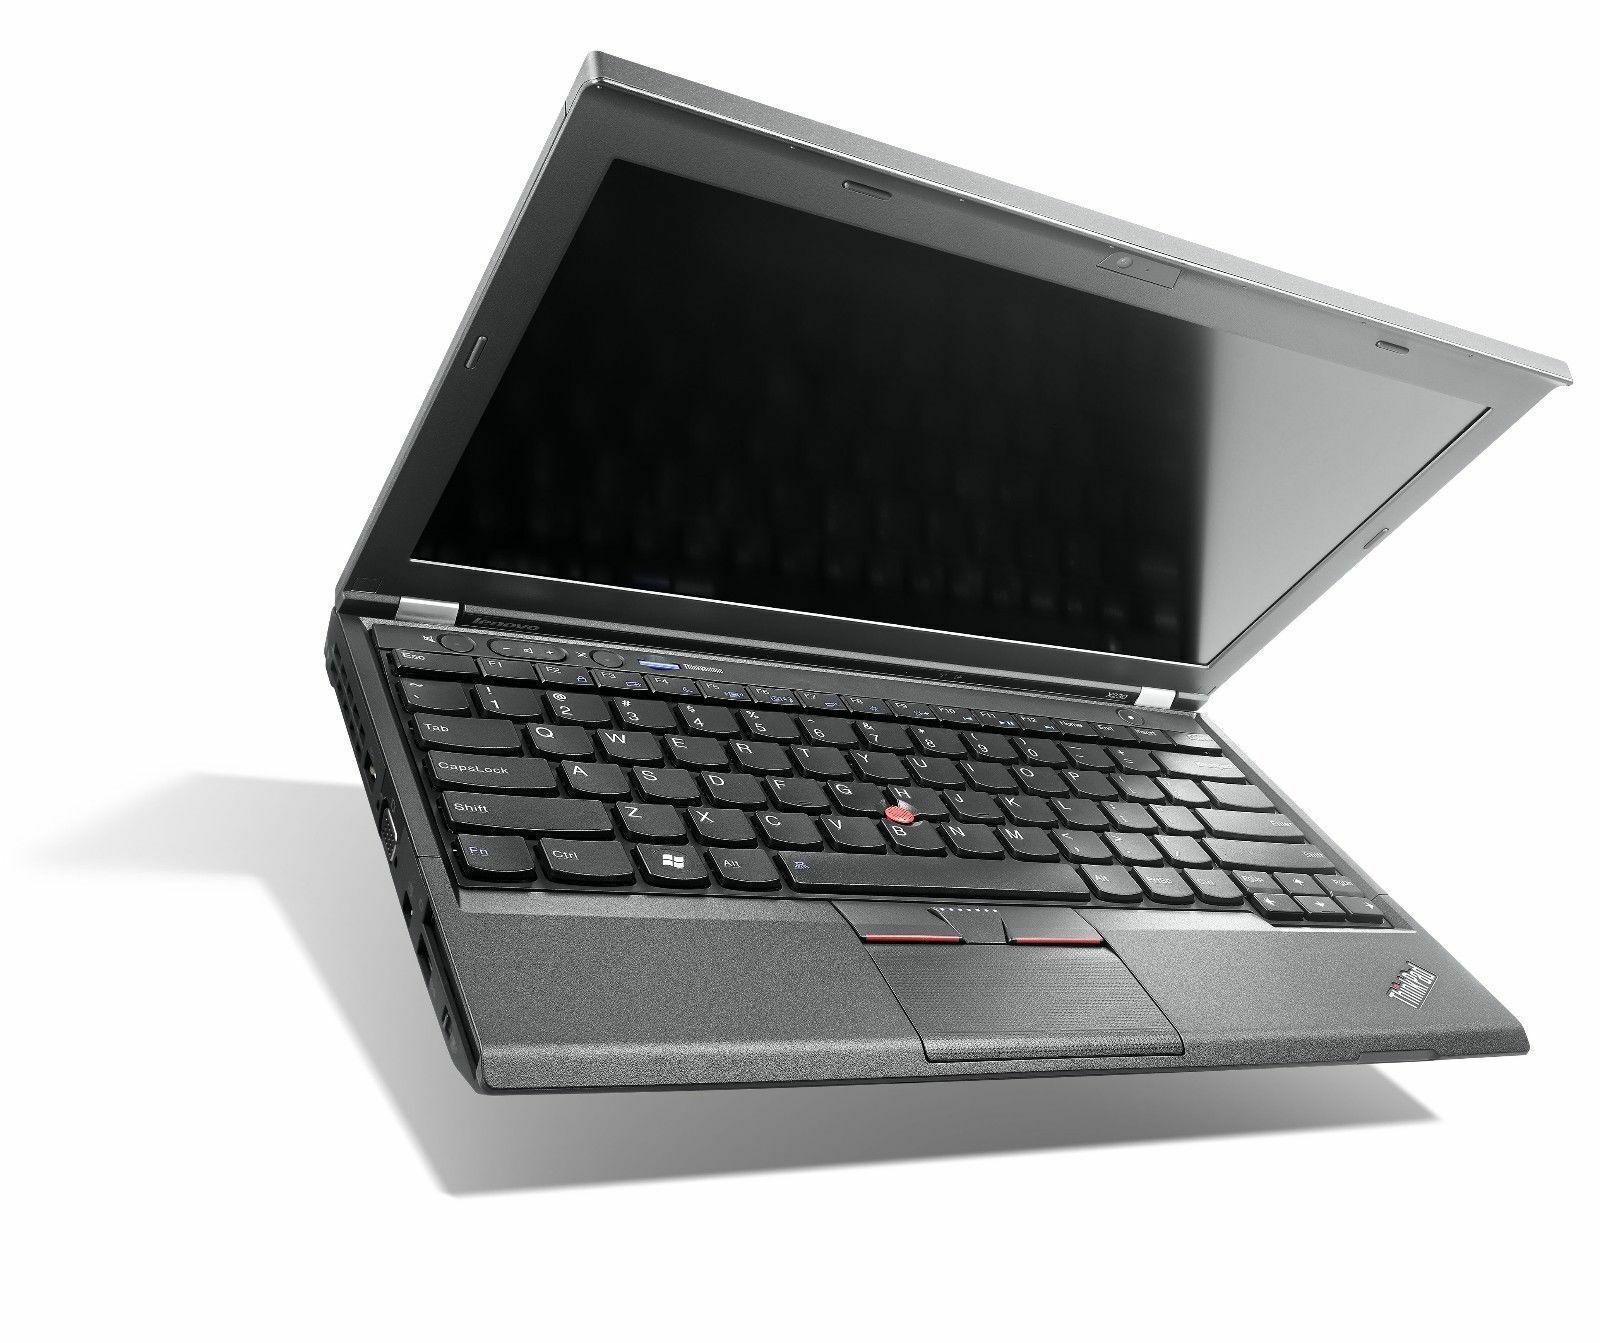 Lenovo ThinkPad X230 Intel i7 3520m 2.90Ghz 8GB RAM 120GB HDD 12.5" NO OS Image 1